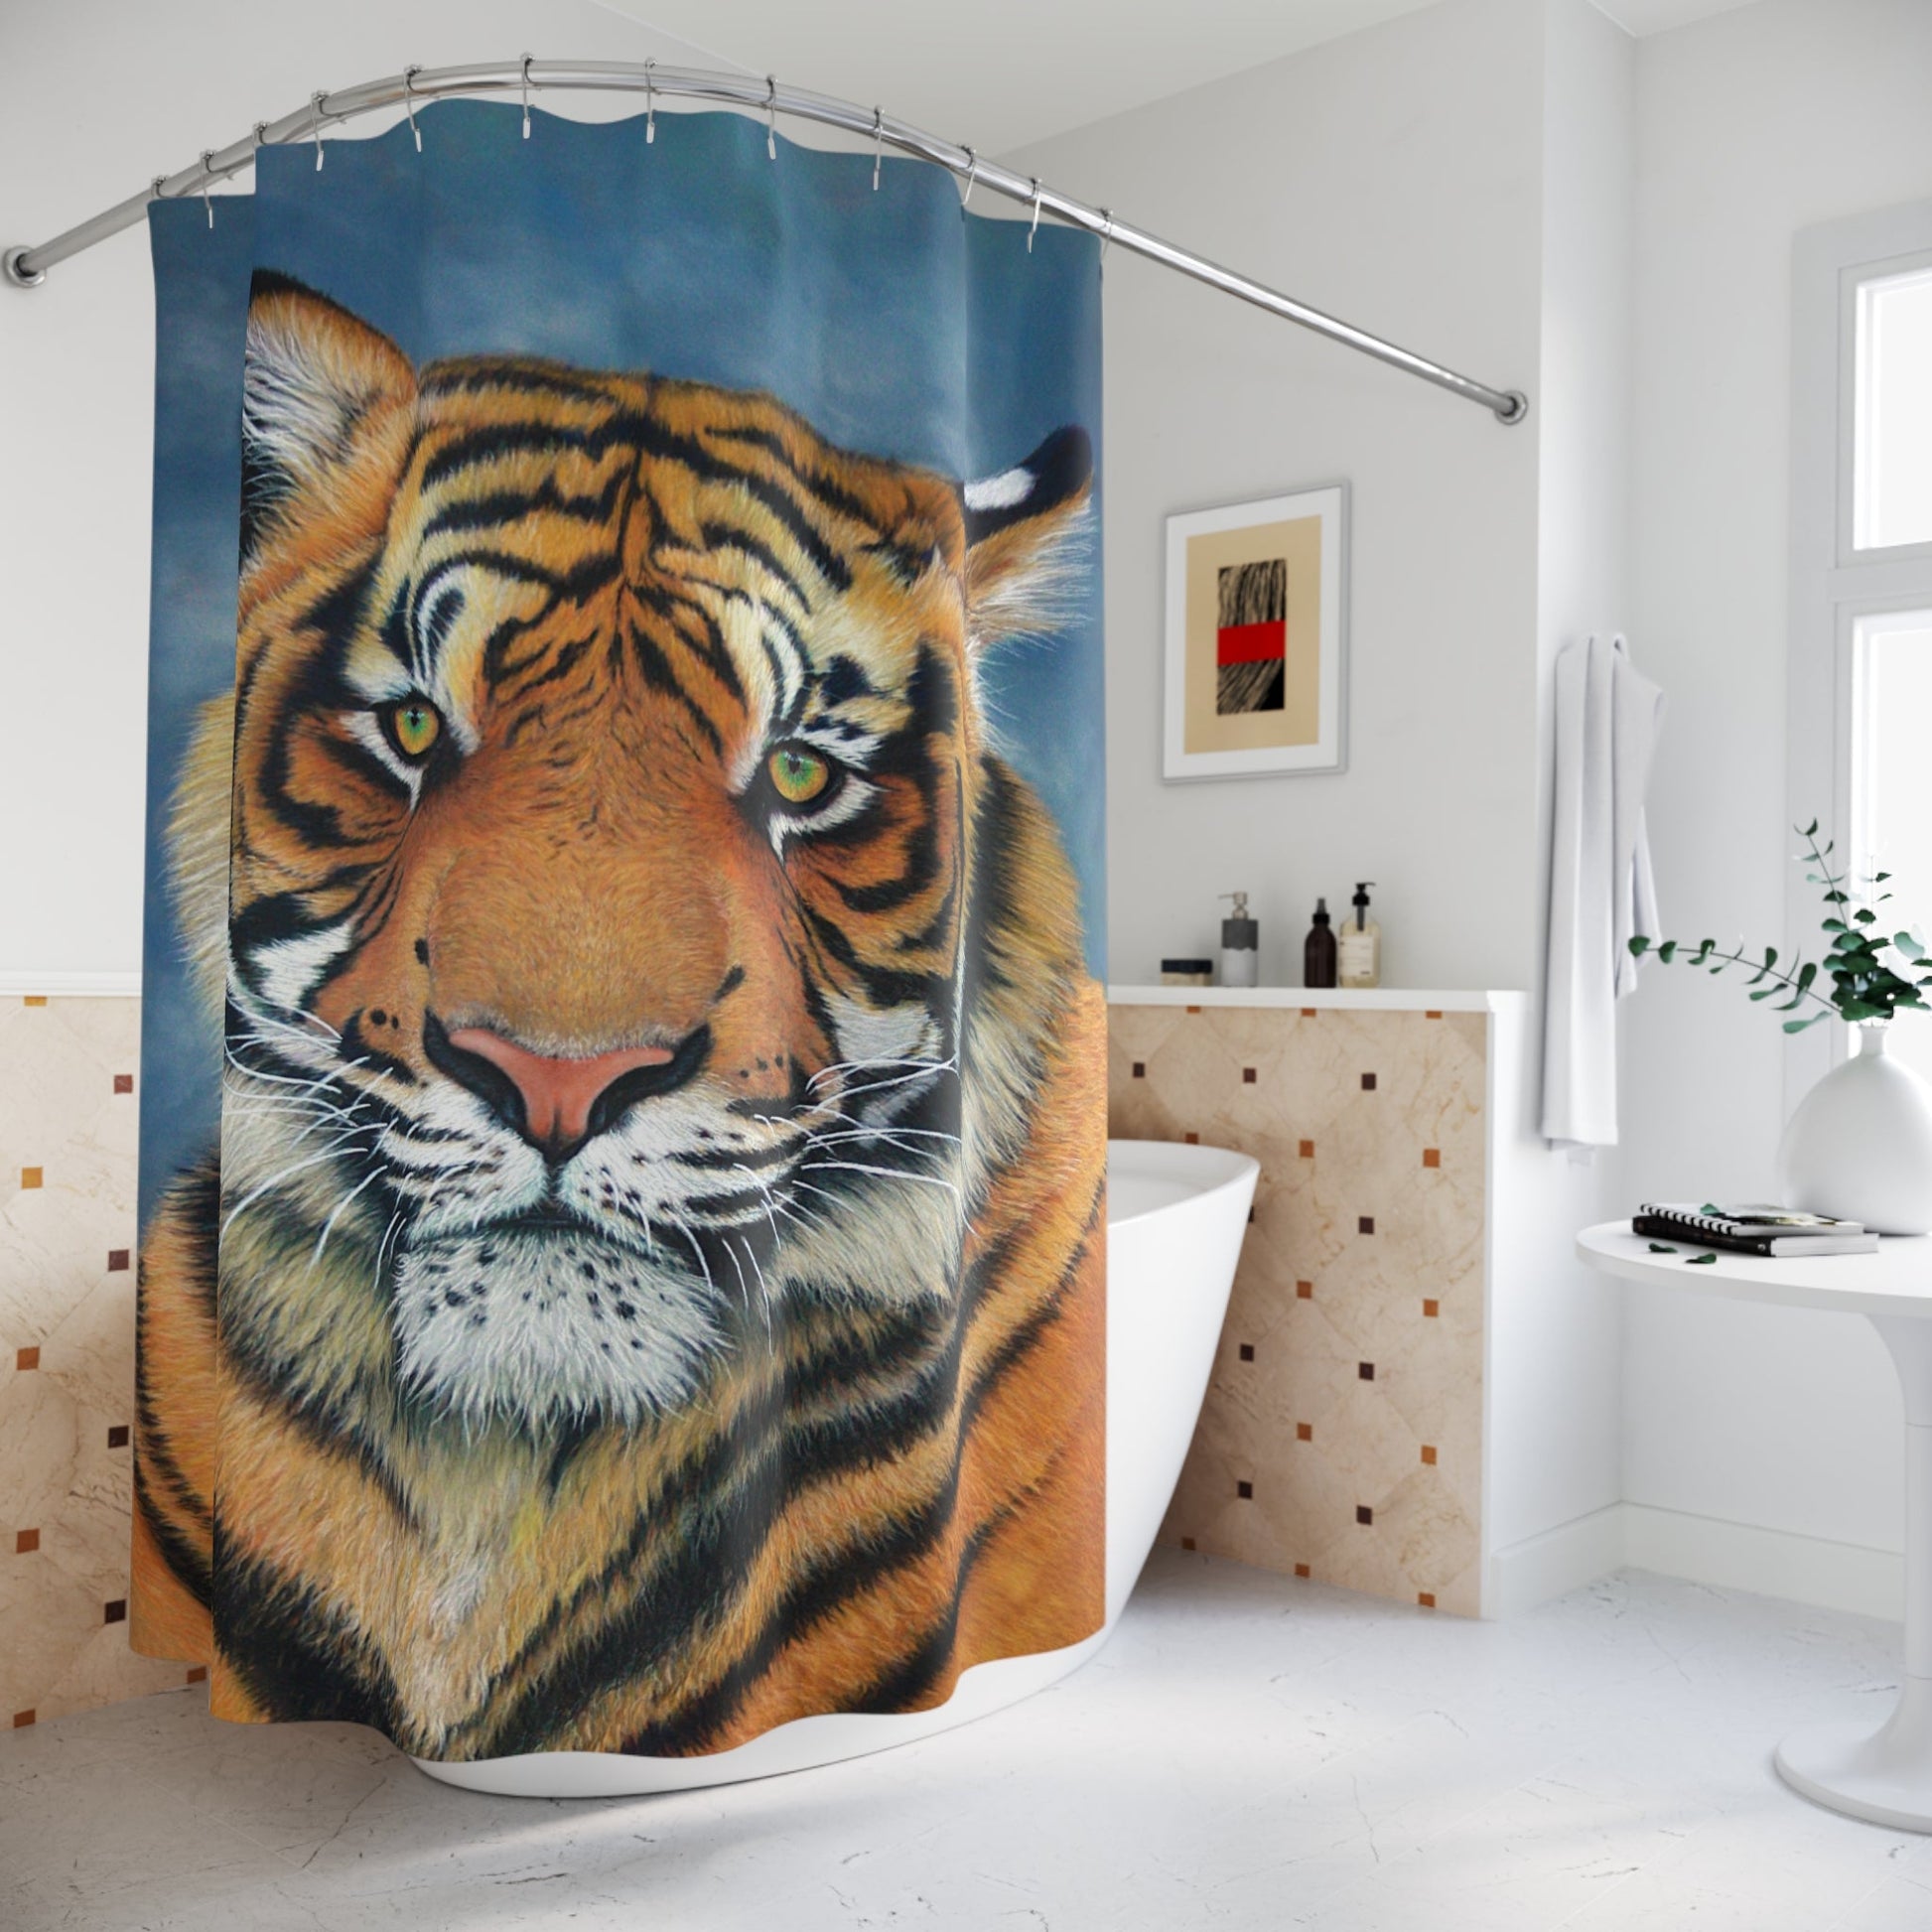 Shower Curtain - "TIGER"